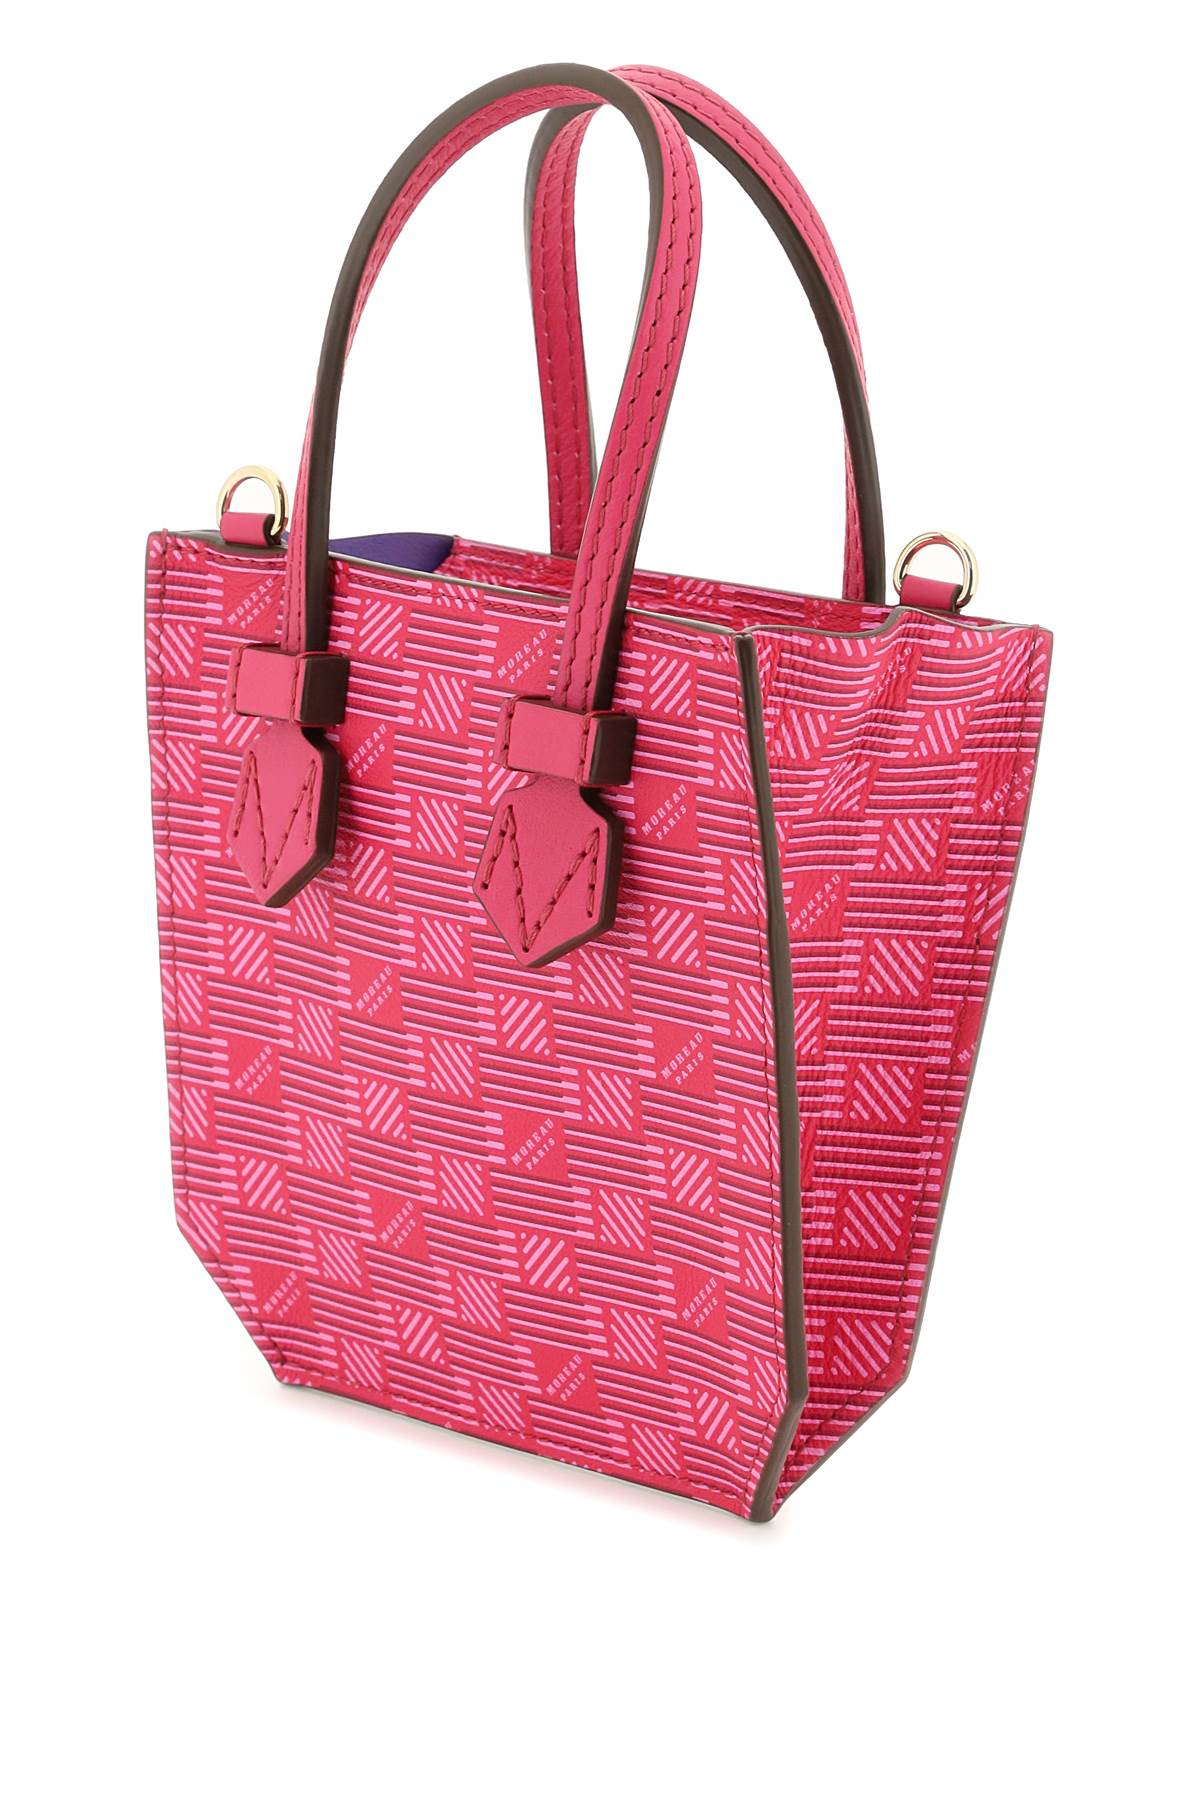 MOREAU PARIS Mini Bregançon Handbag in Pink Calfskin with Monogram and Gold Hardware